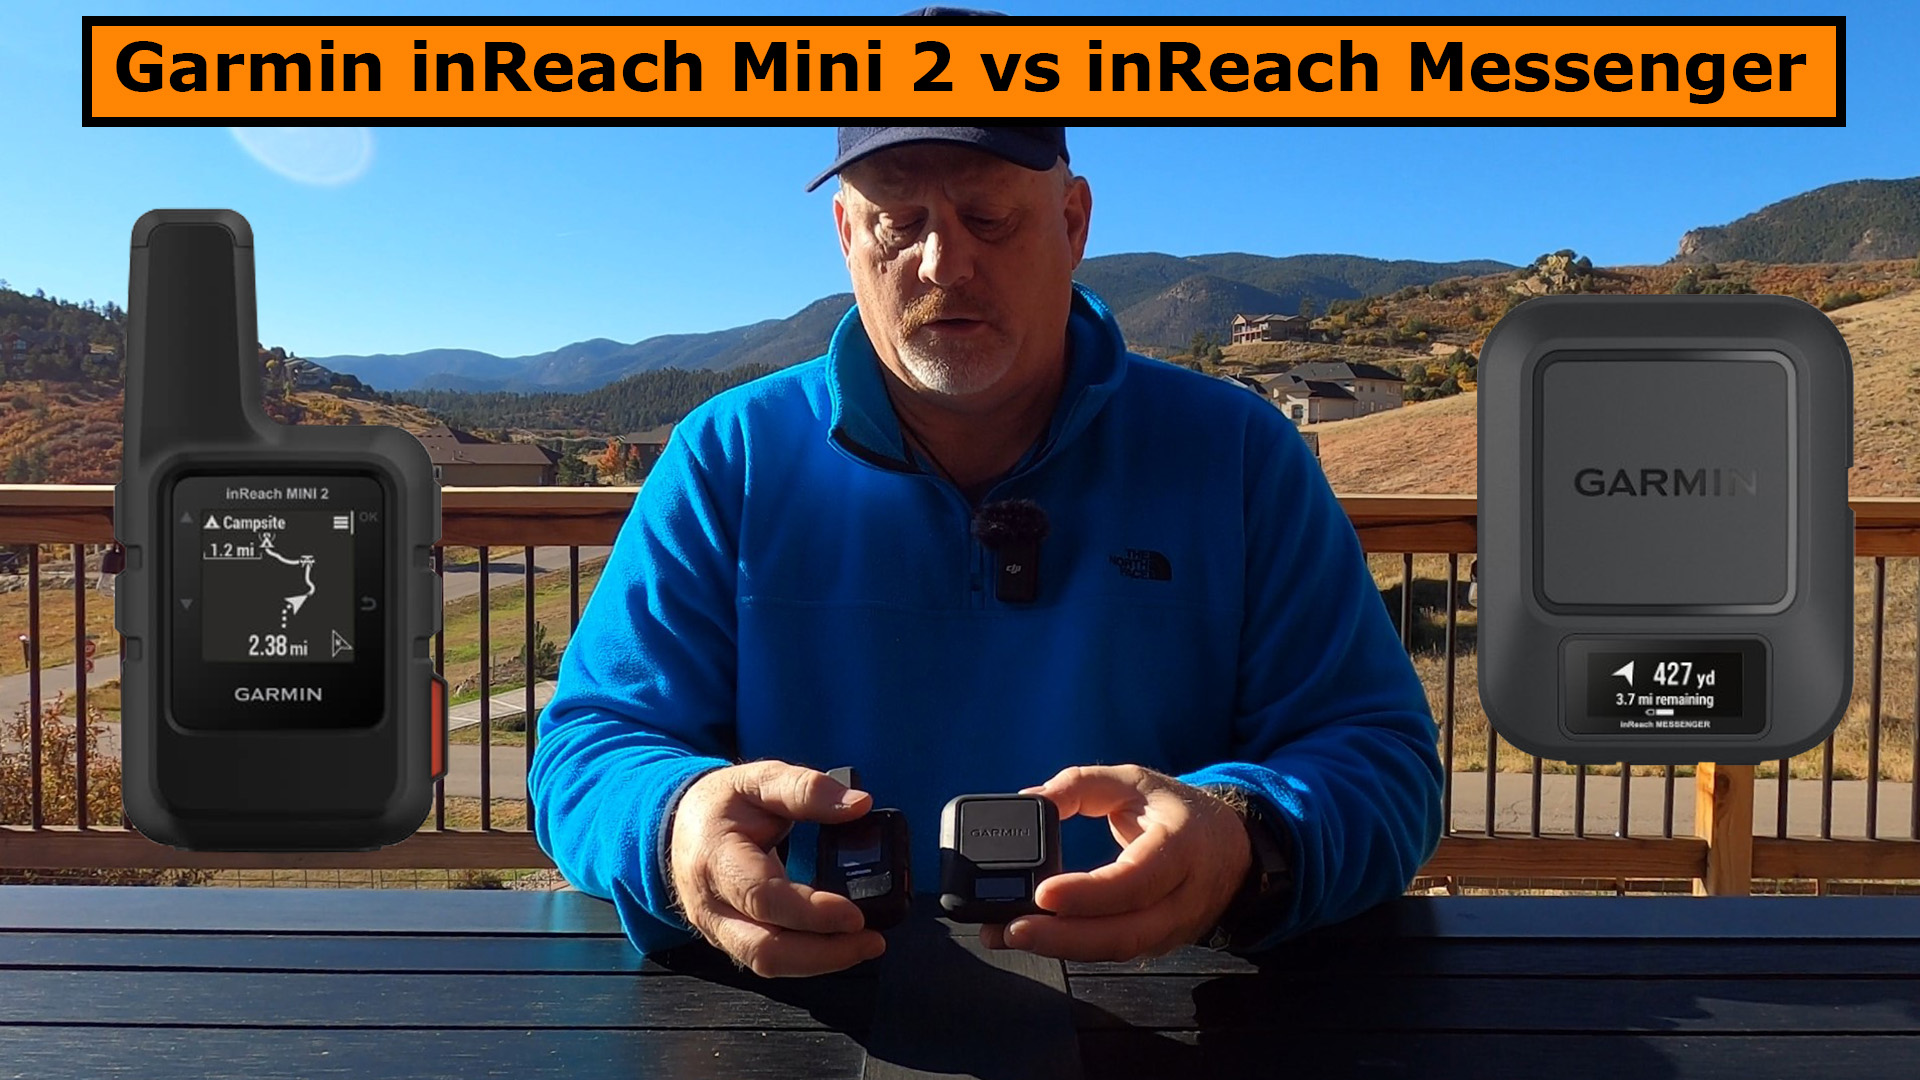 Garmin inReach Mini 2 vs inReach Messenger